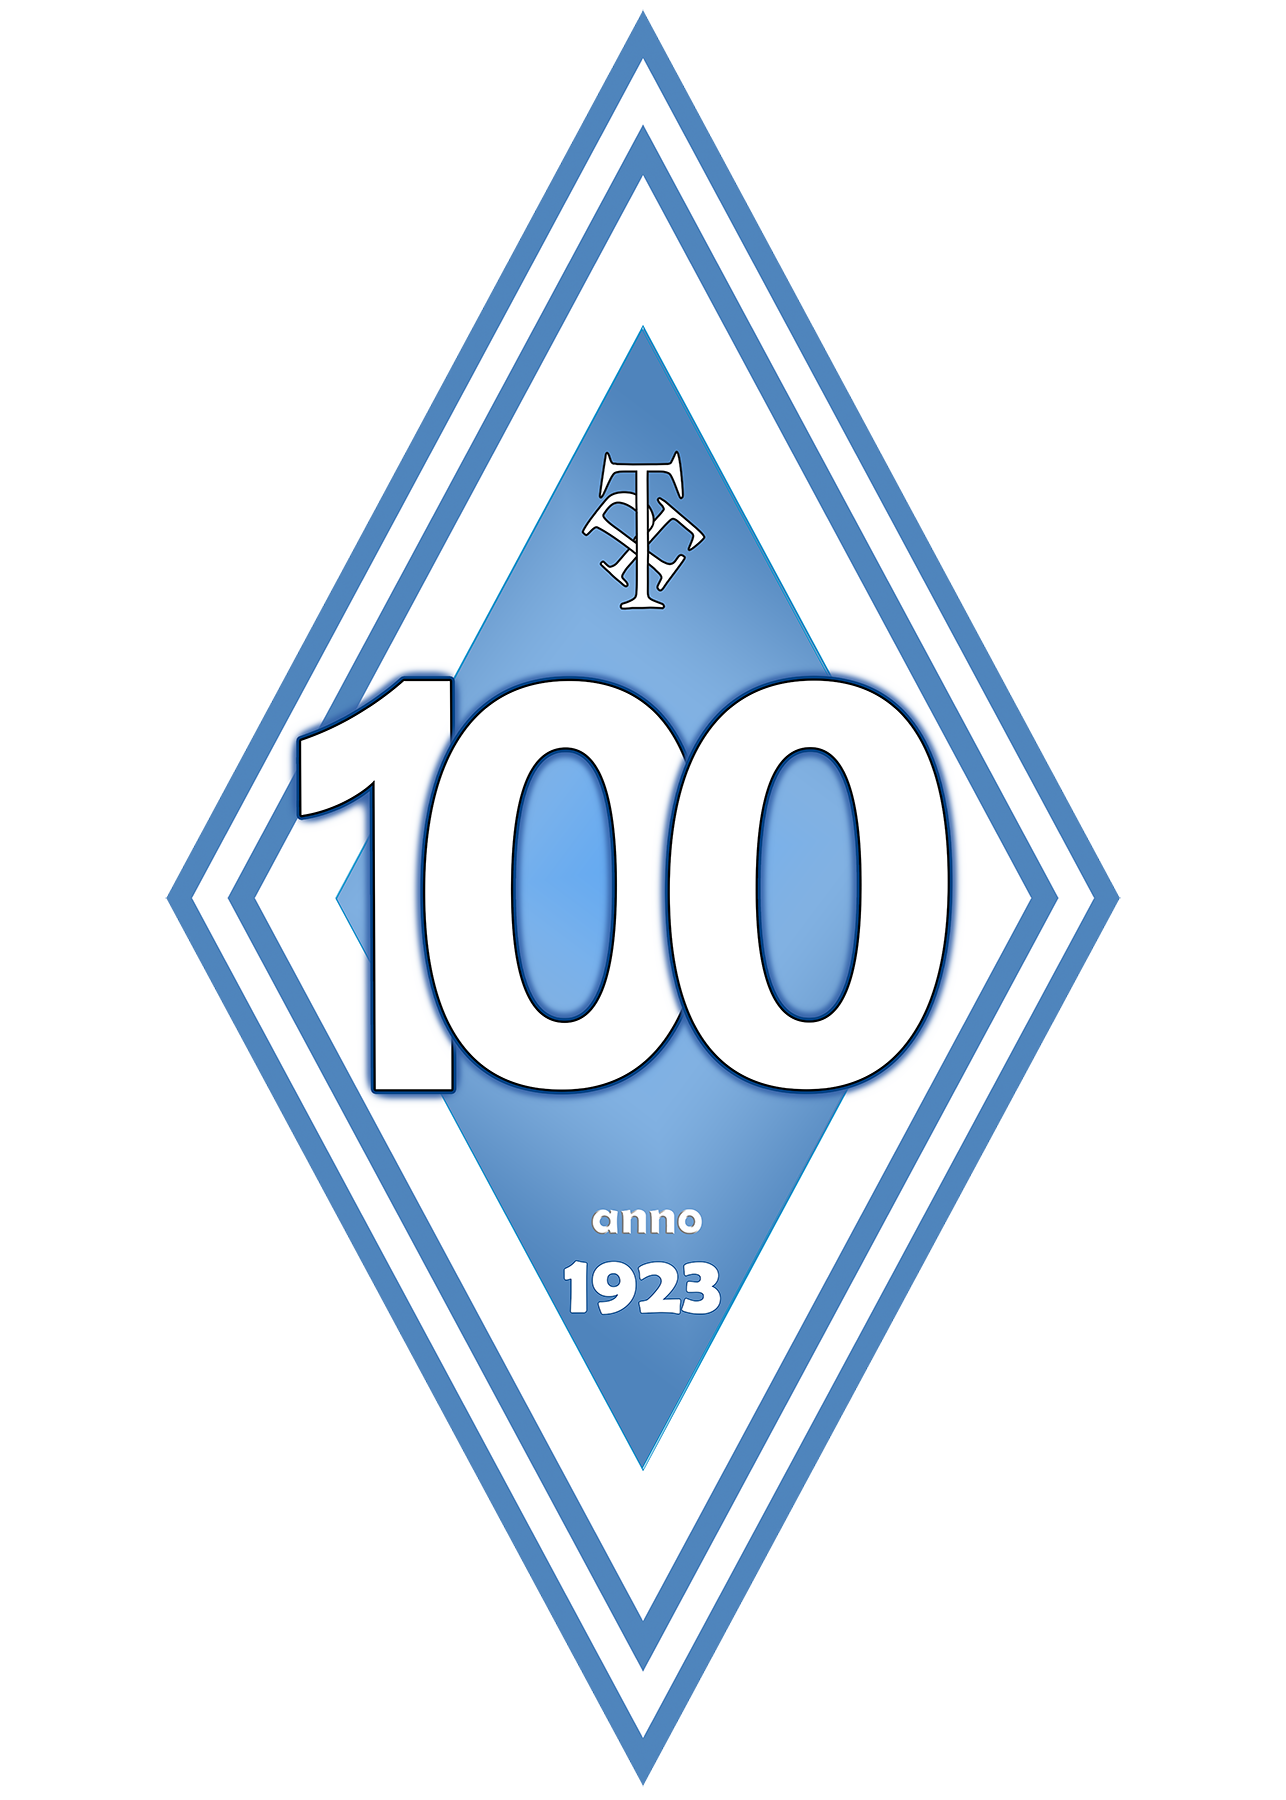 TKVG100 logo